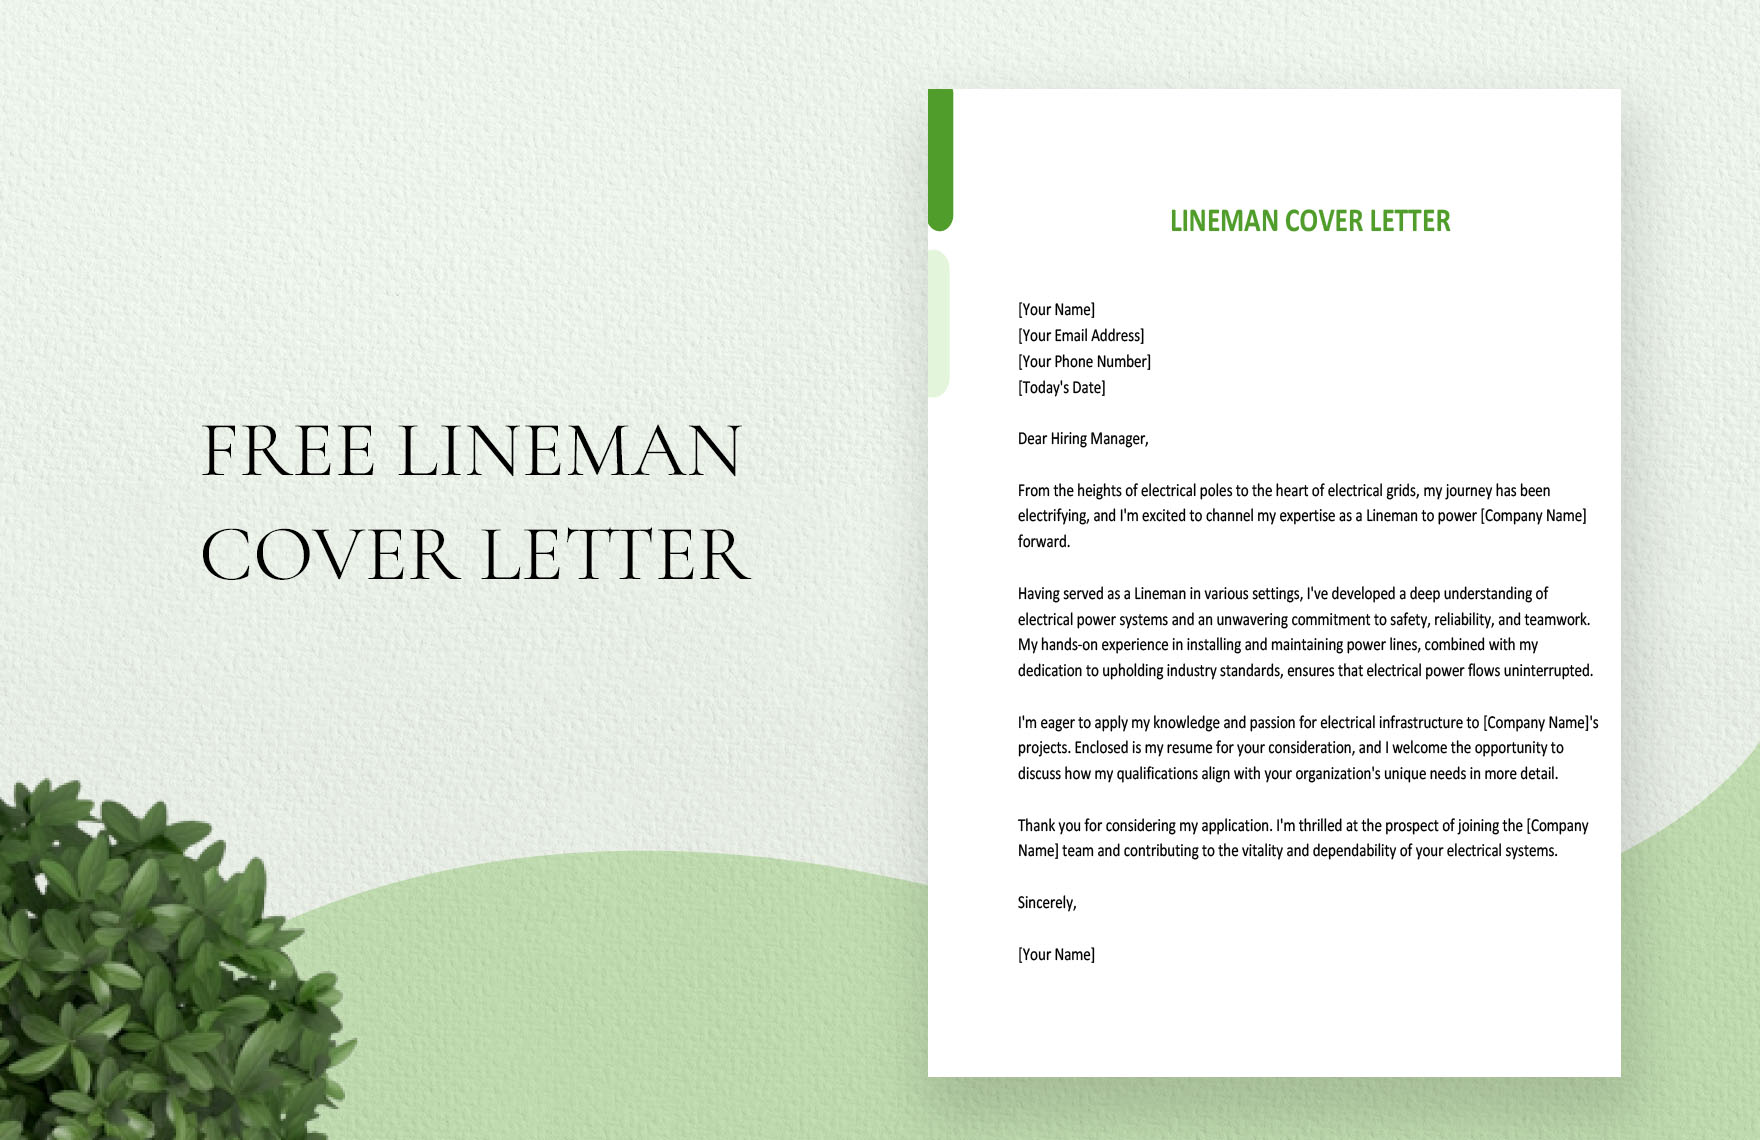 Lineman Cover Letter in Word, Google Docs